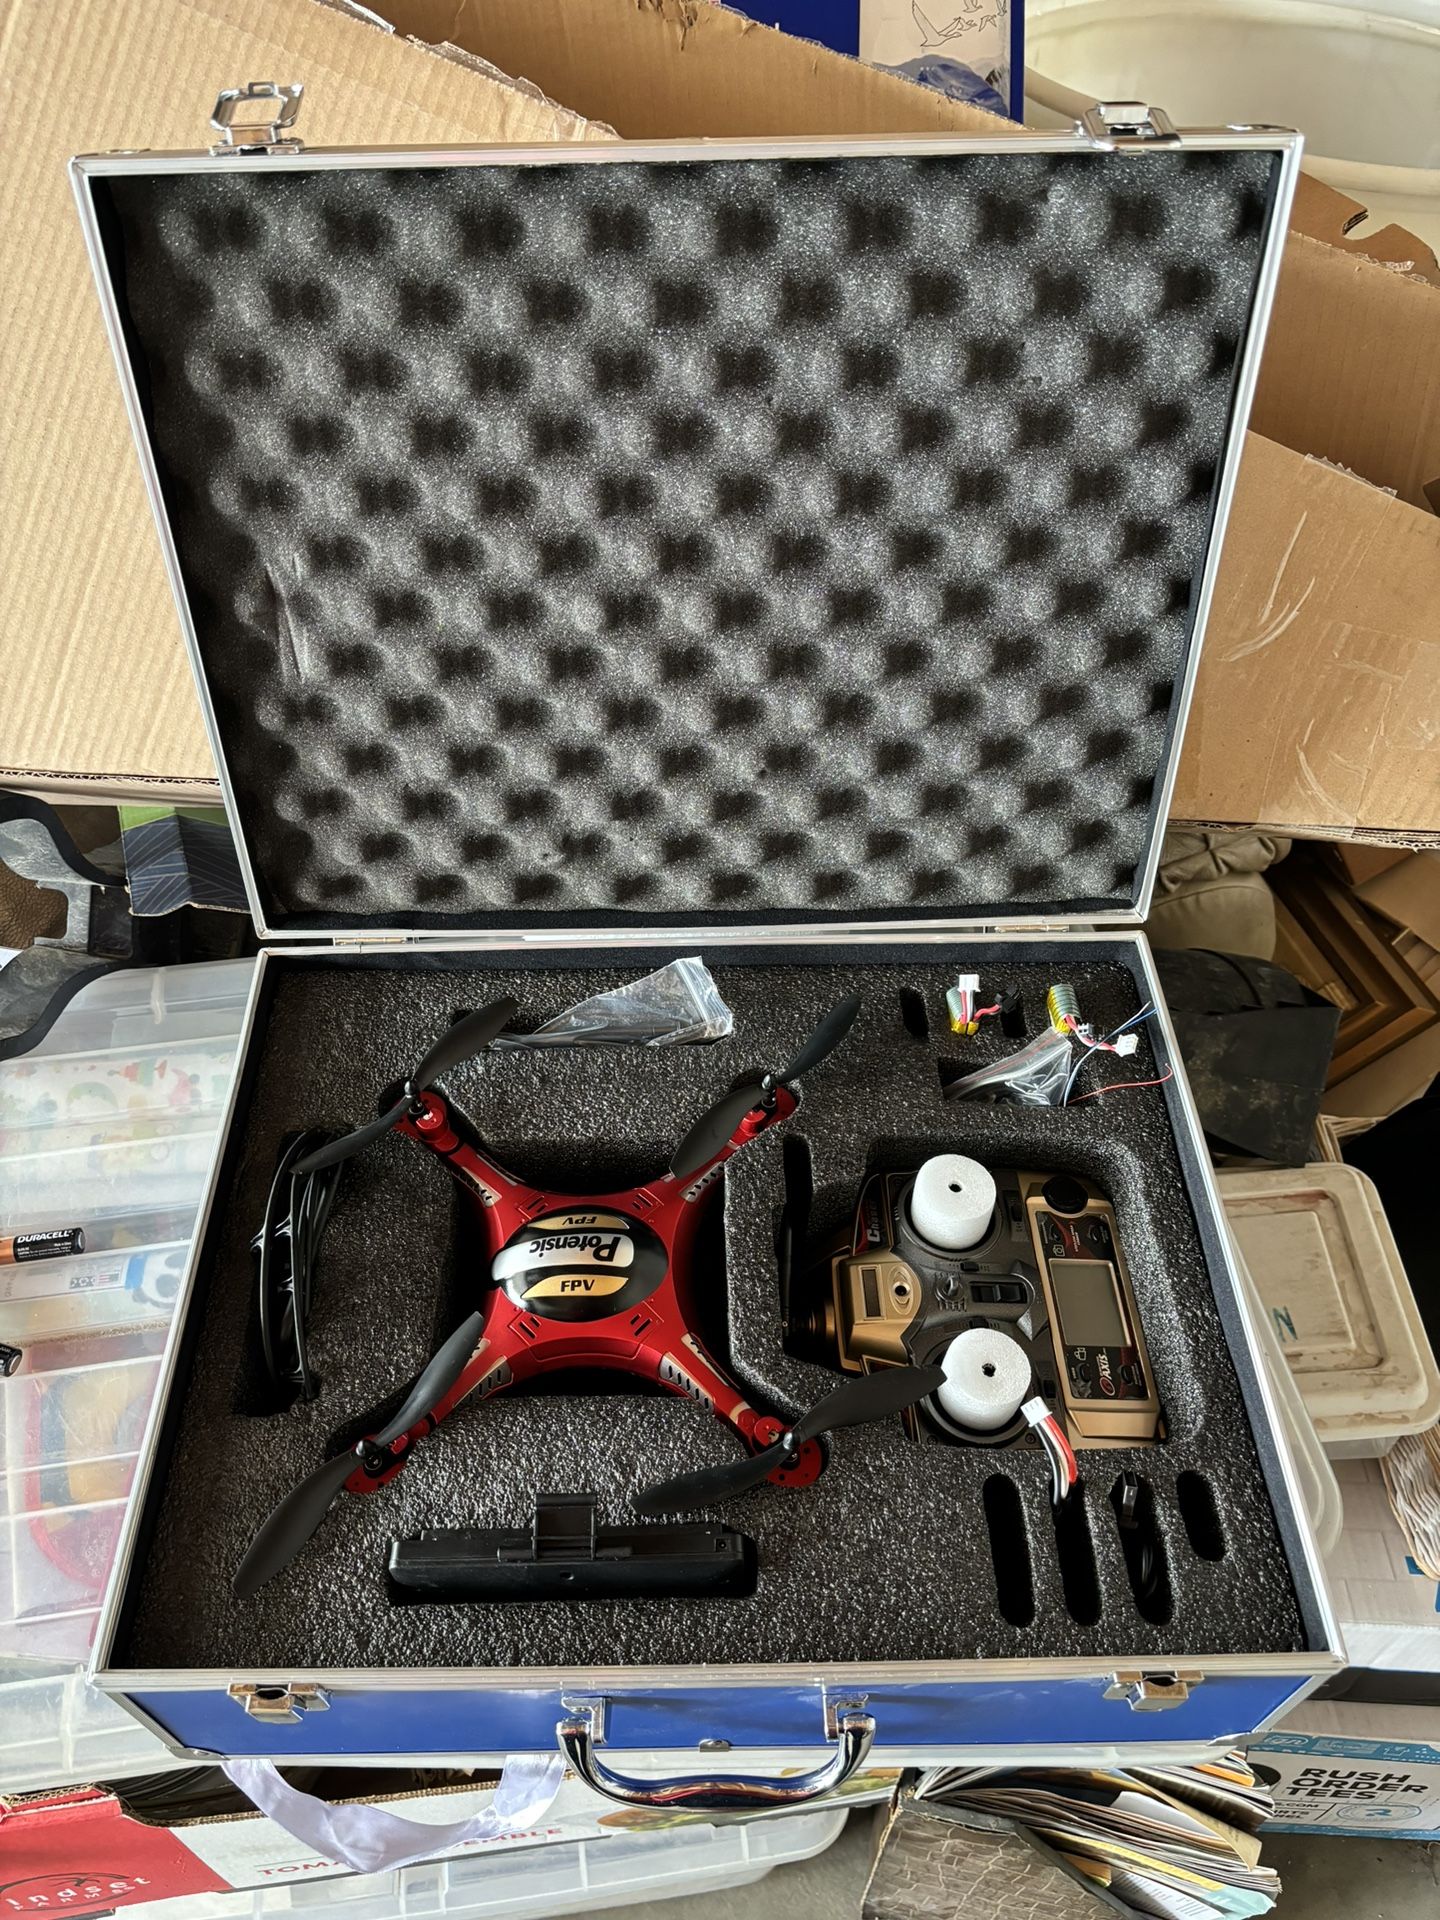 Potensic drone fpv